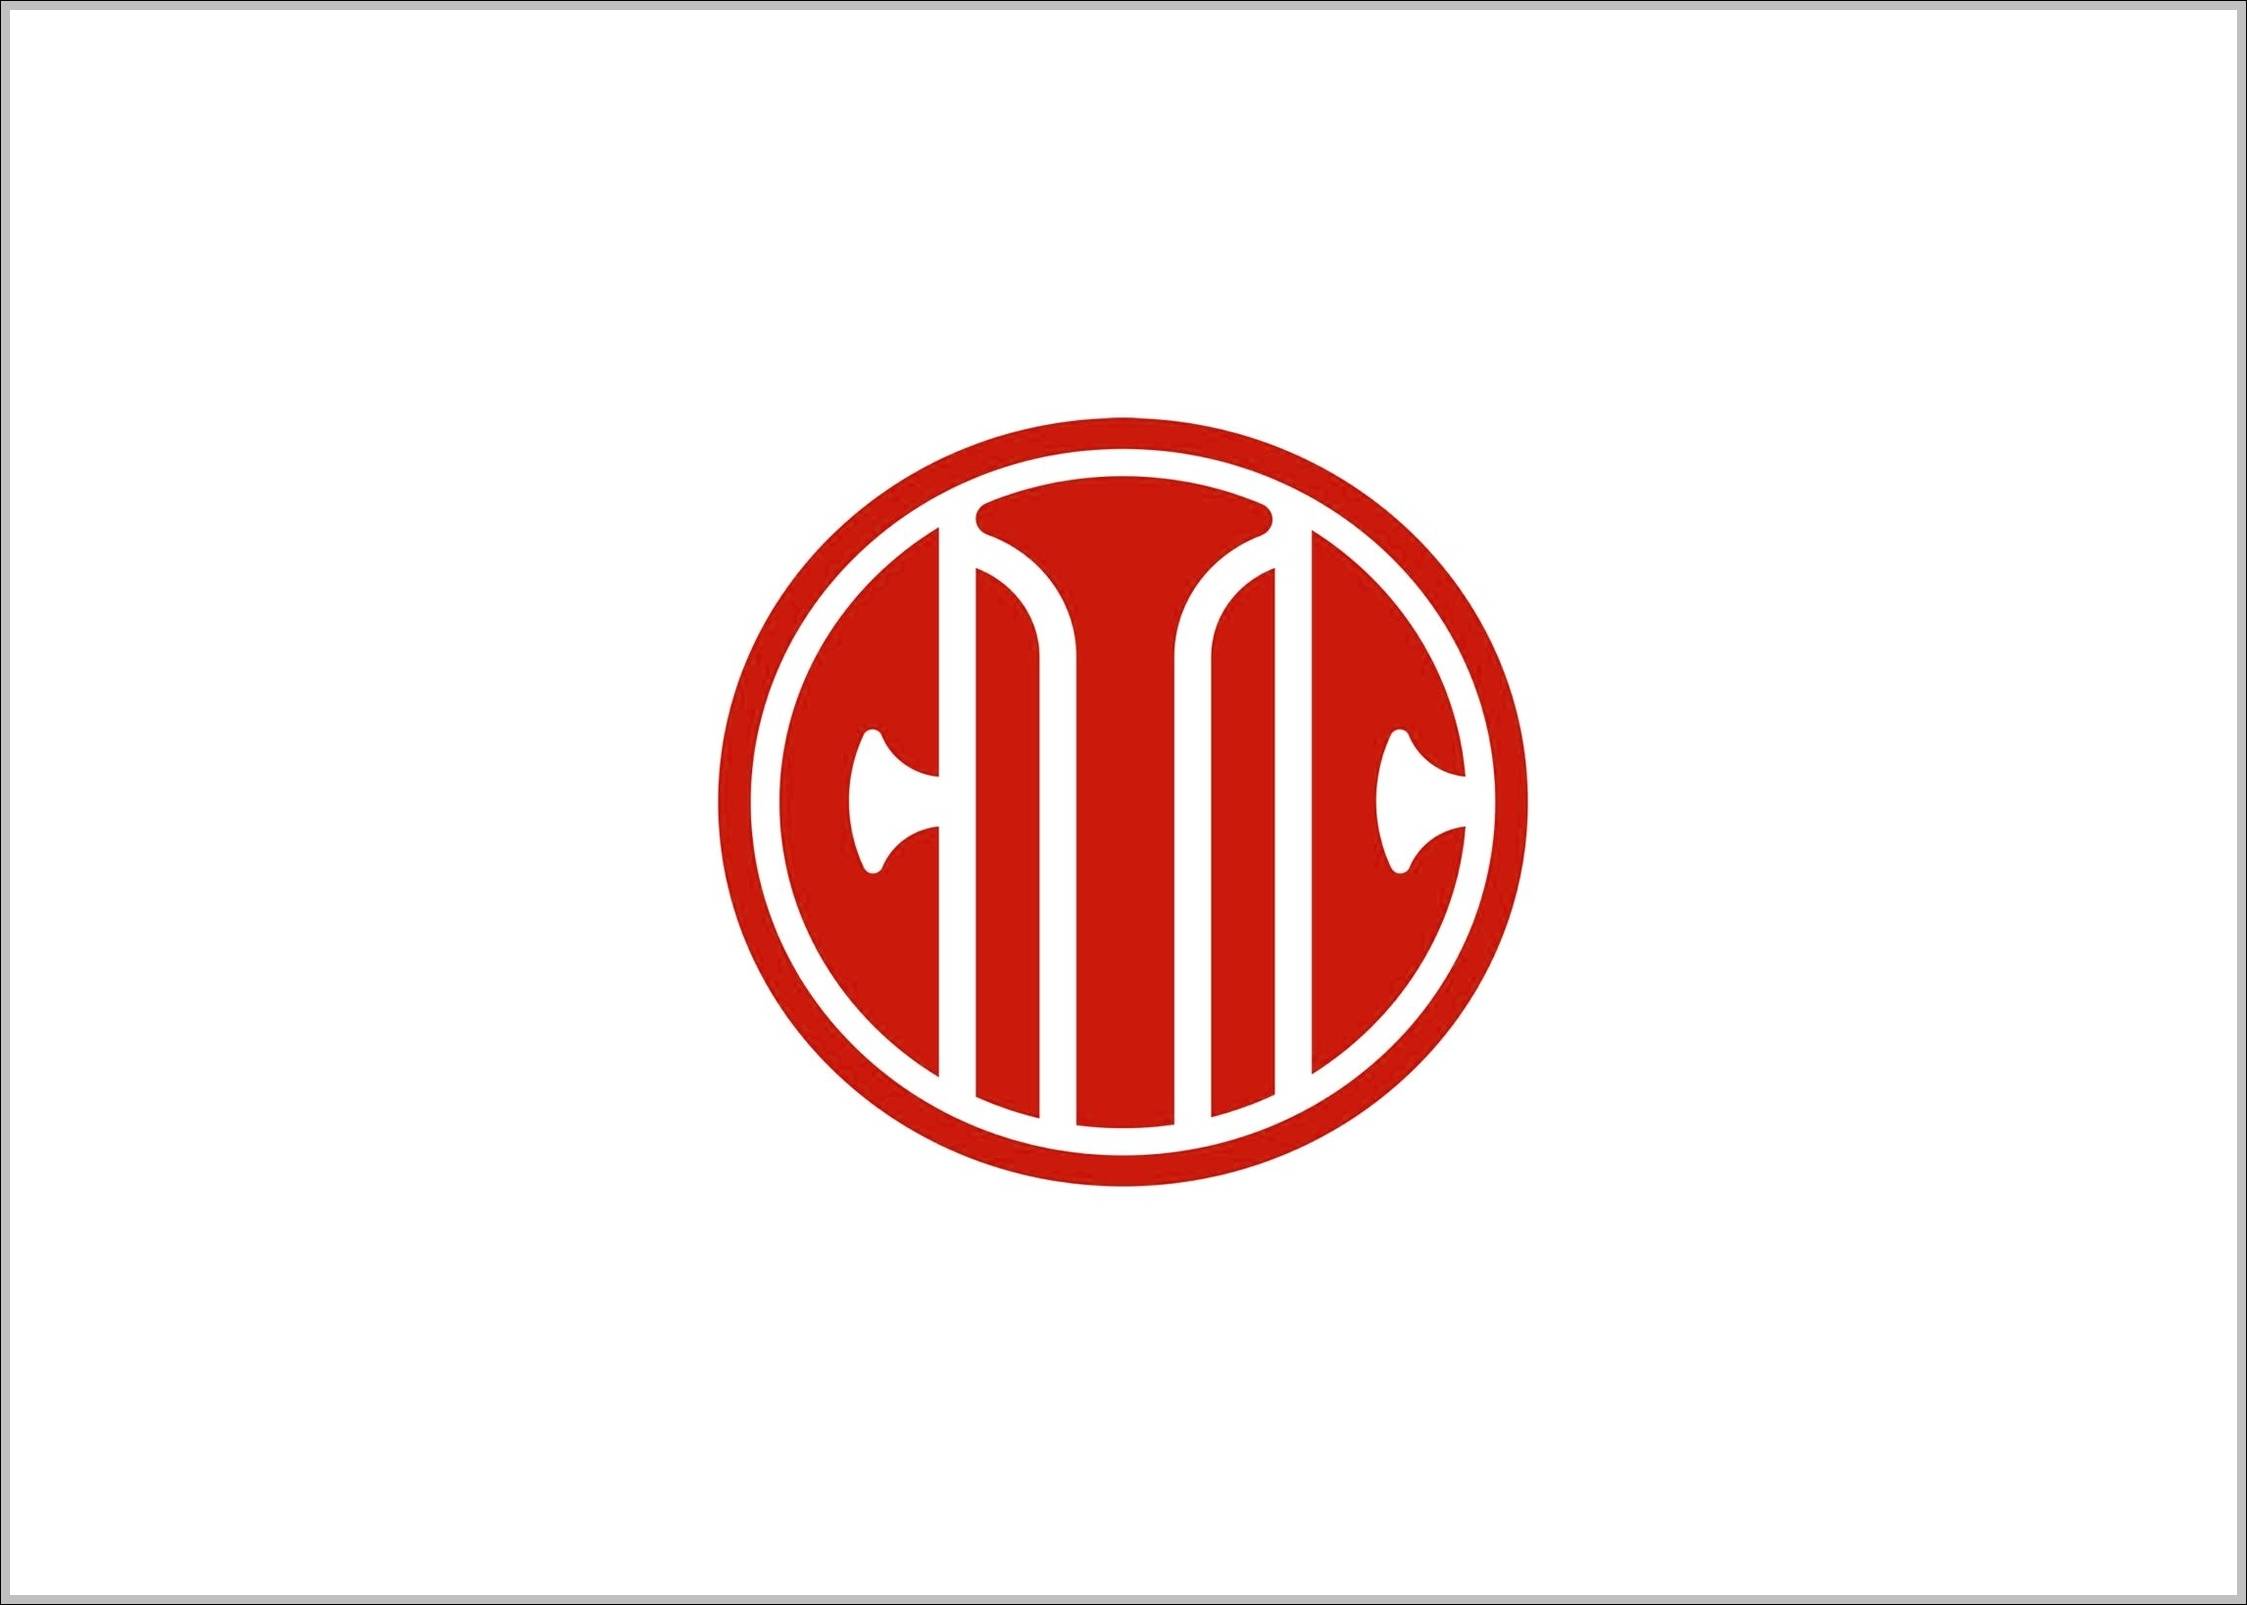 CITIC logo